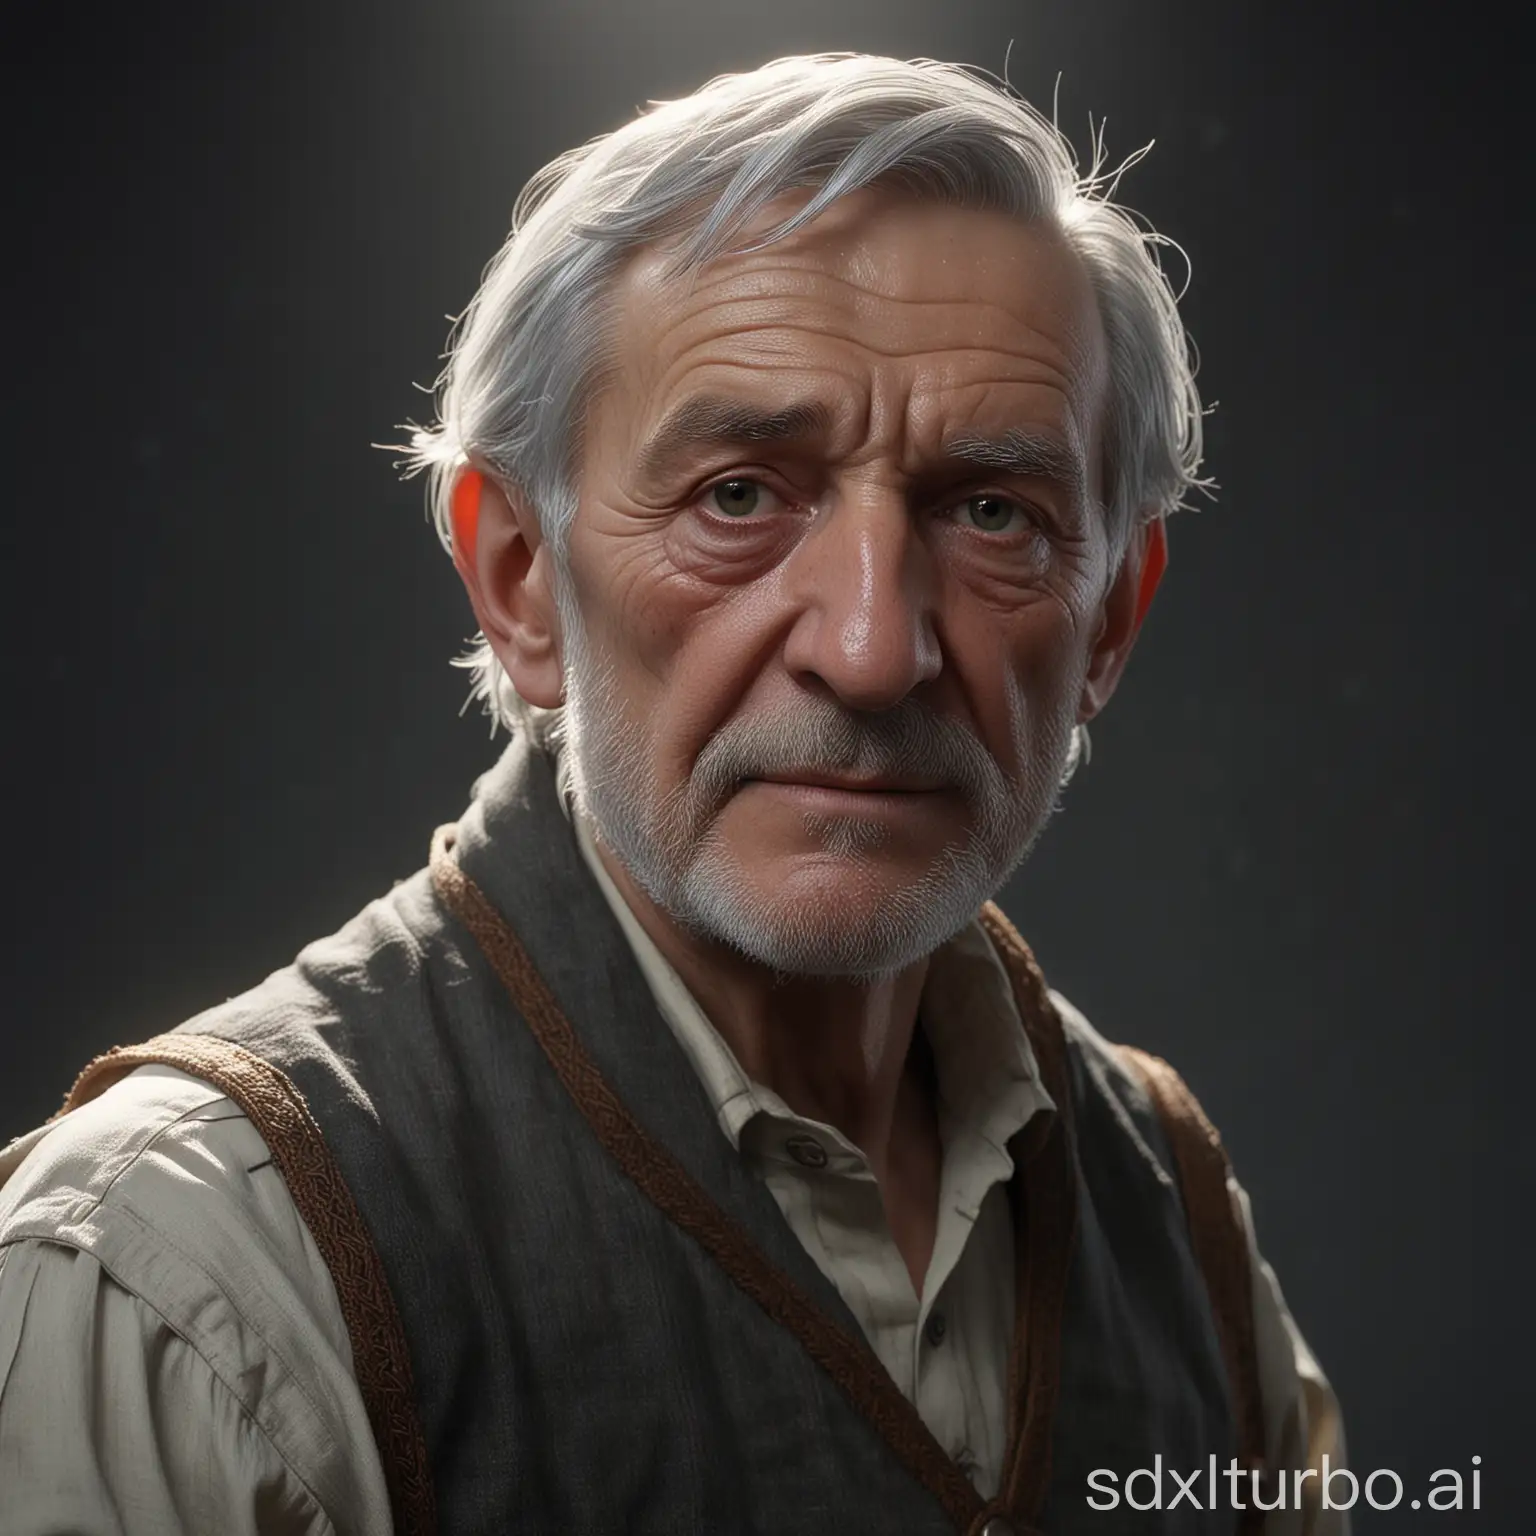 Cinematic-Portrait-Abraham-Elderly-Farmer-in-Middle-Ages-Attire